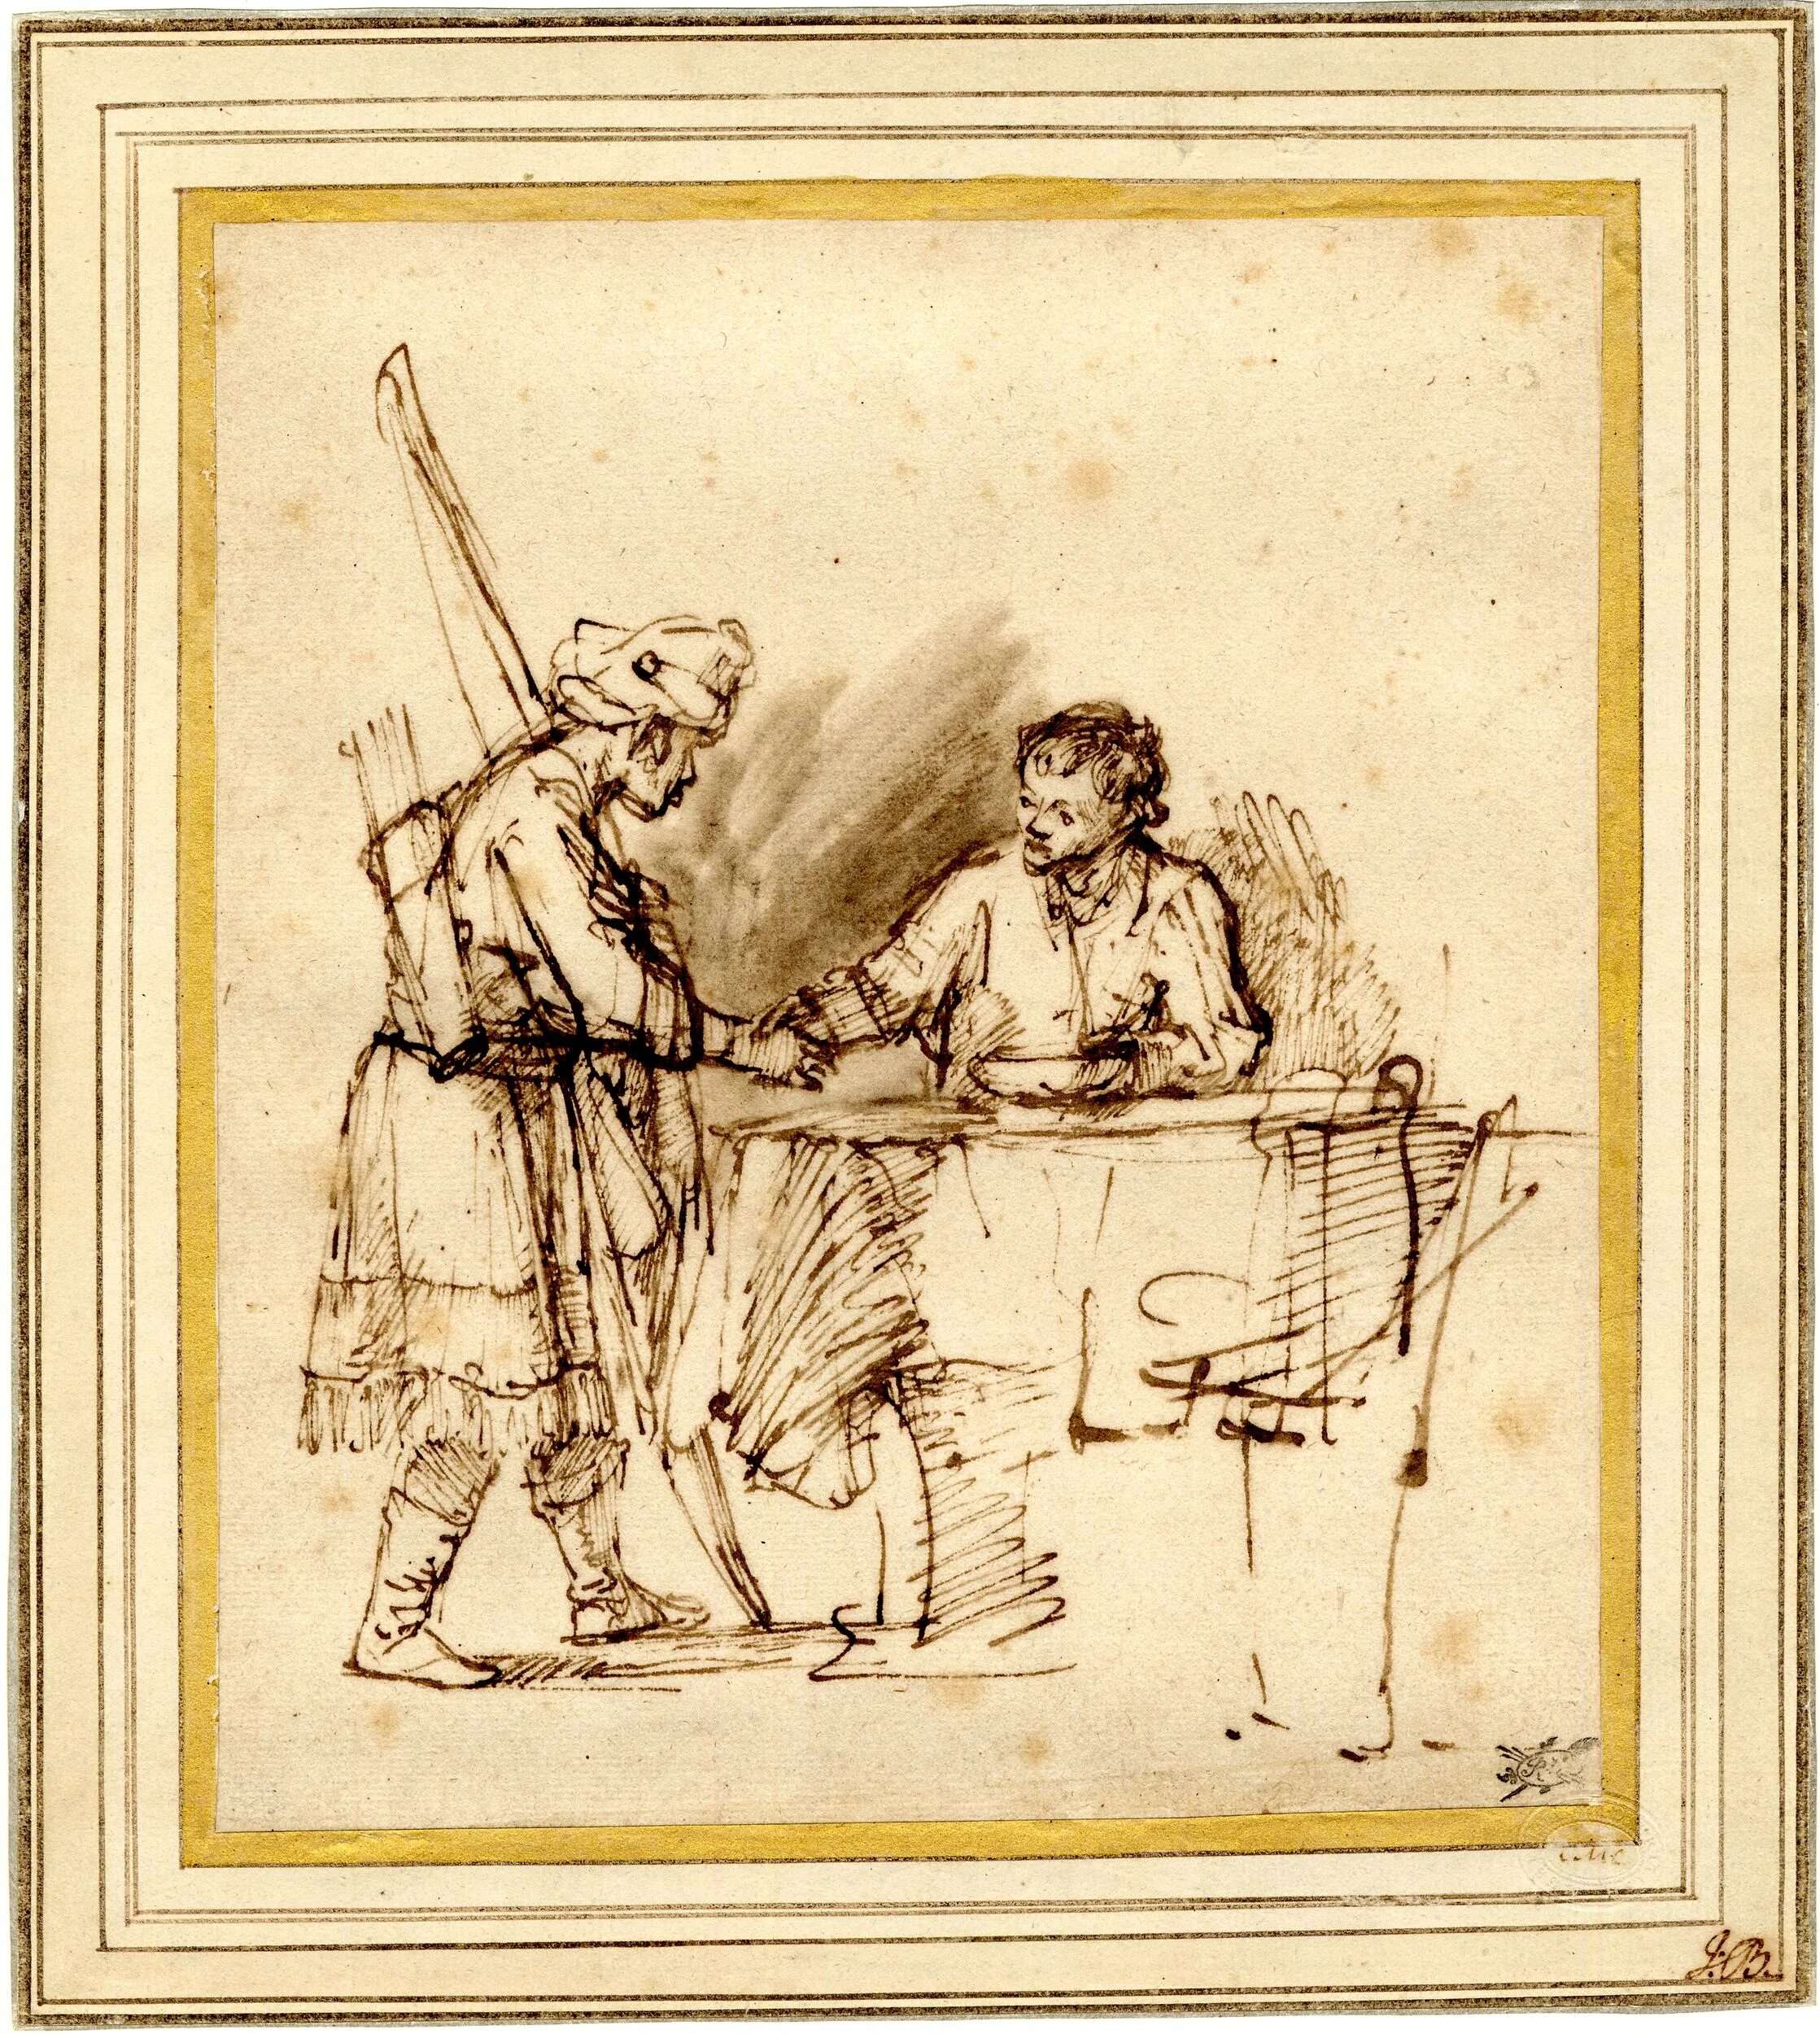 Исав и Иаков гравюра. Рембрандт рисунки. Первородство за чечевичную похлебку. Исав продает первородство картина.